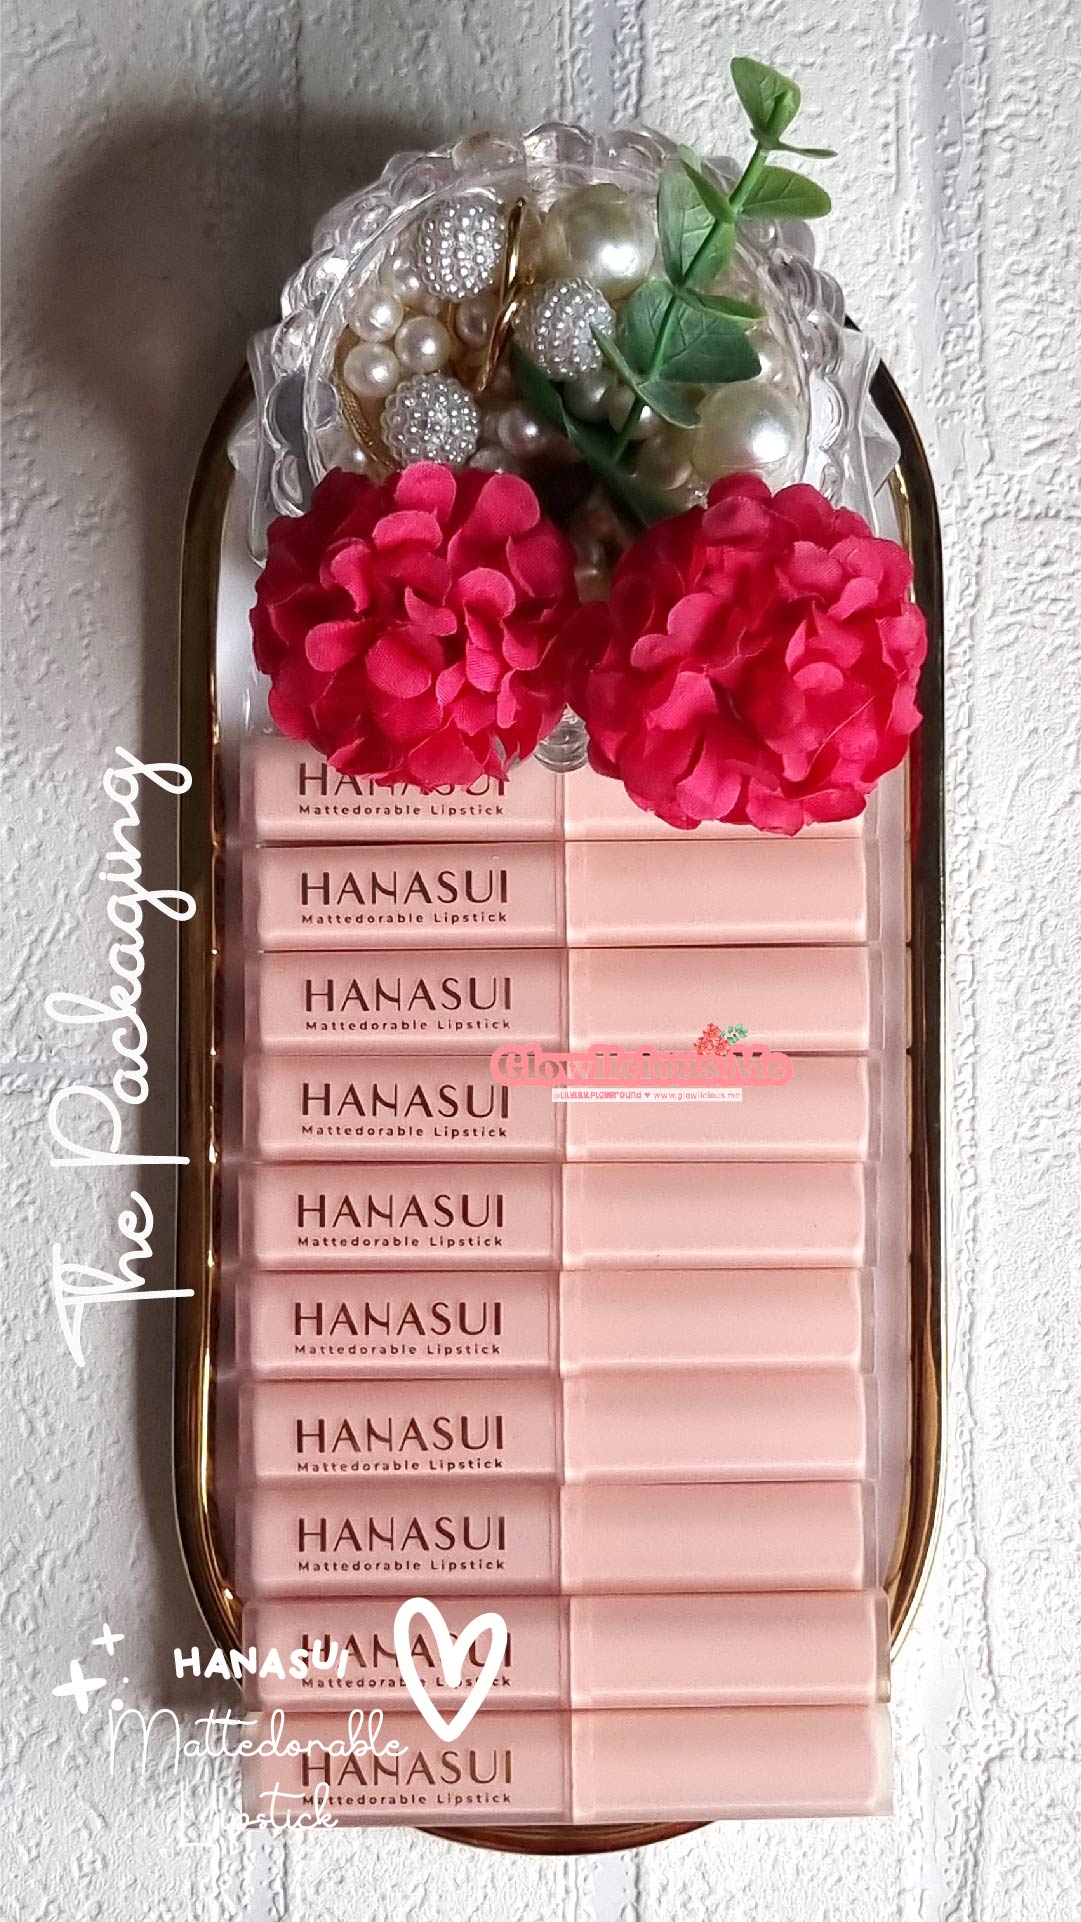 Hanasui Mattedorable Lipstick Anti Geser - The Packaging